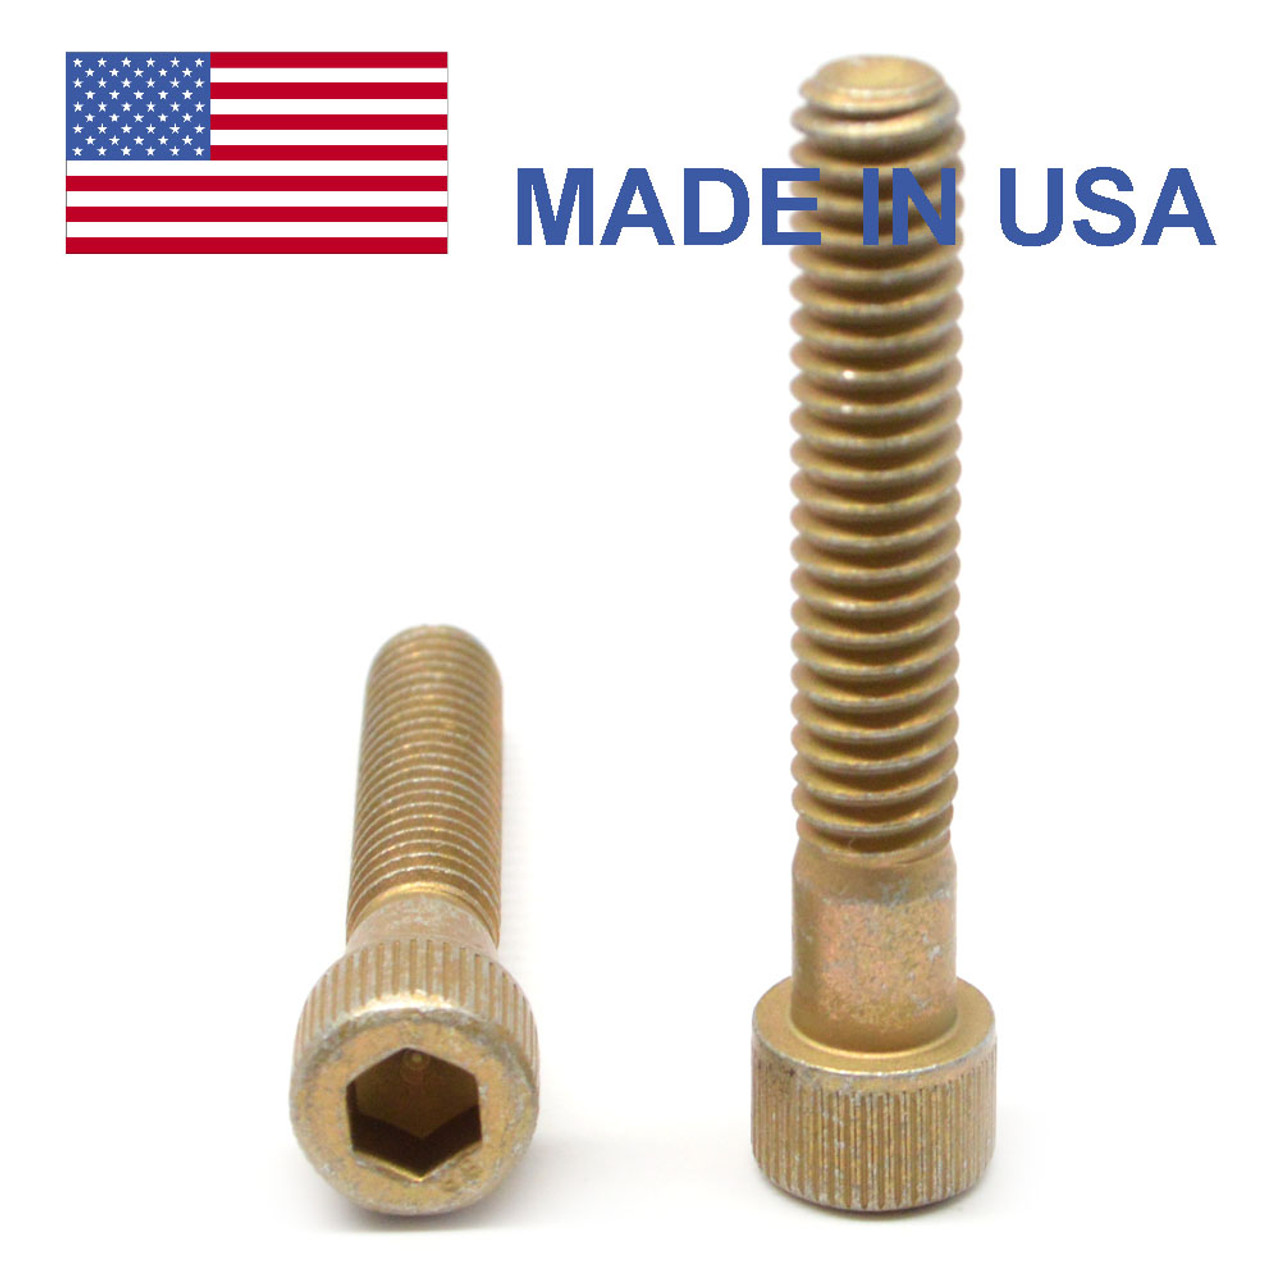 1/4-20 x 1 Coarse Thread MS16997 Socket Head Cap Screw - USA Alloy Steel Yellow Cadmium Plated